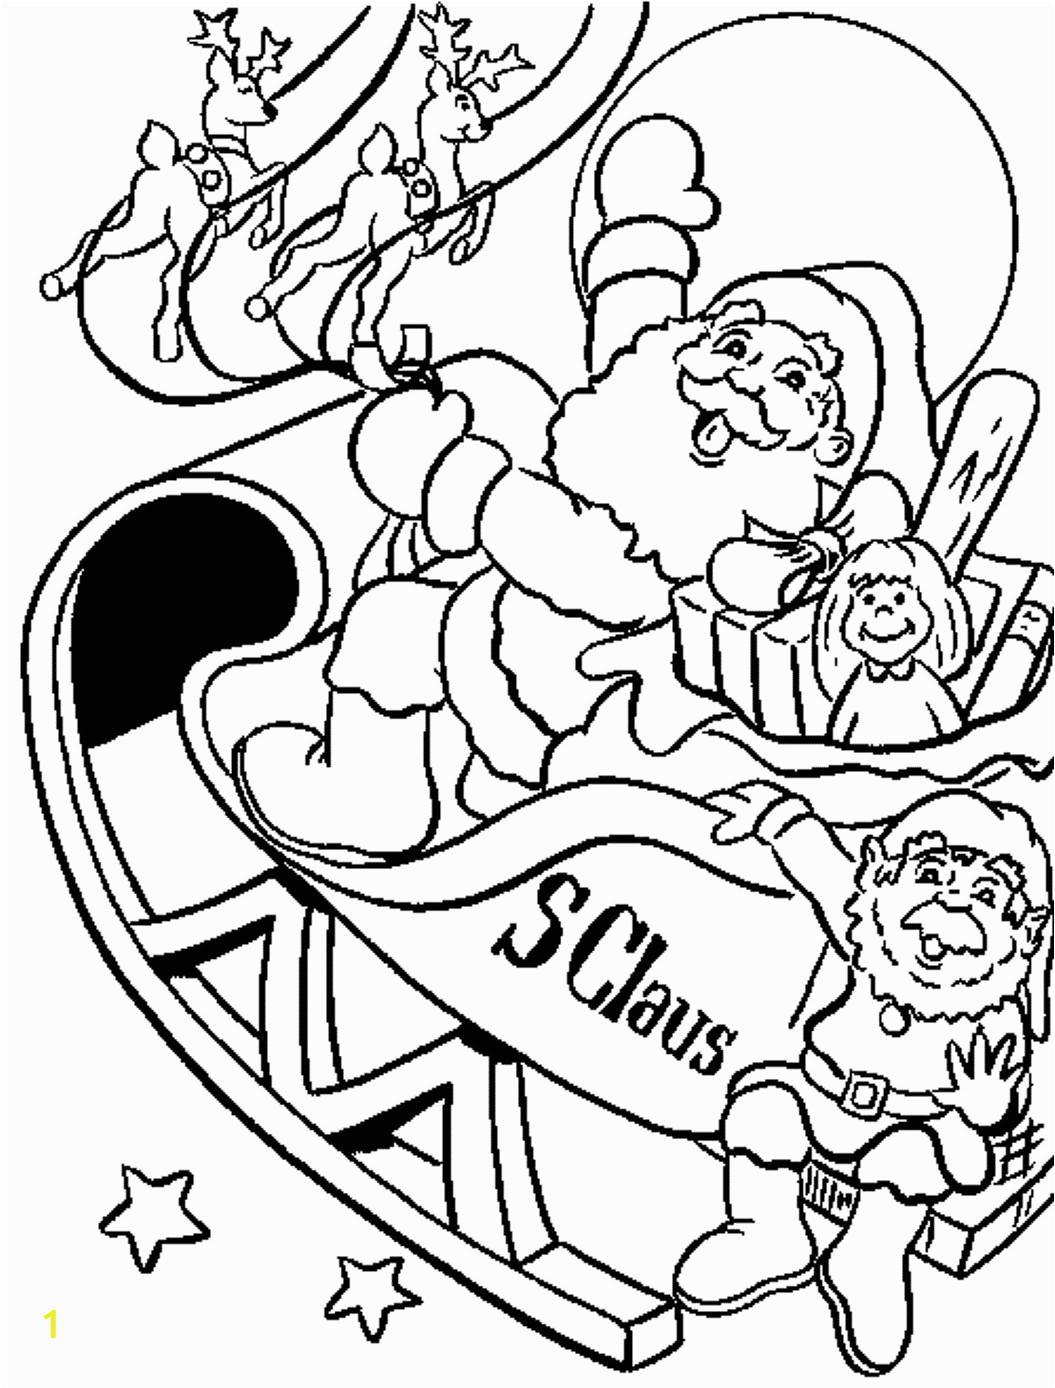 santas sleigh drawing